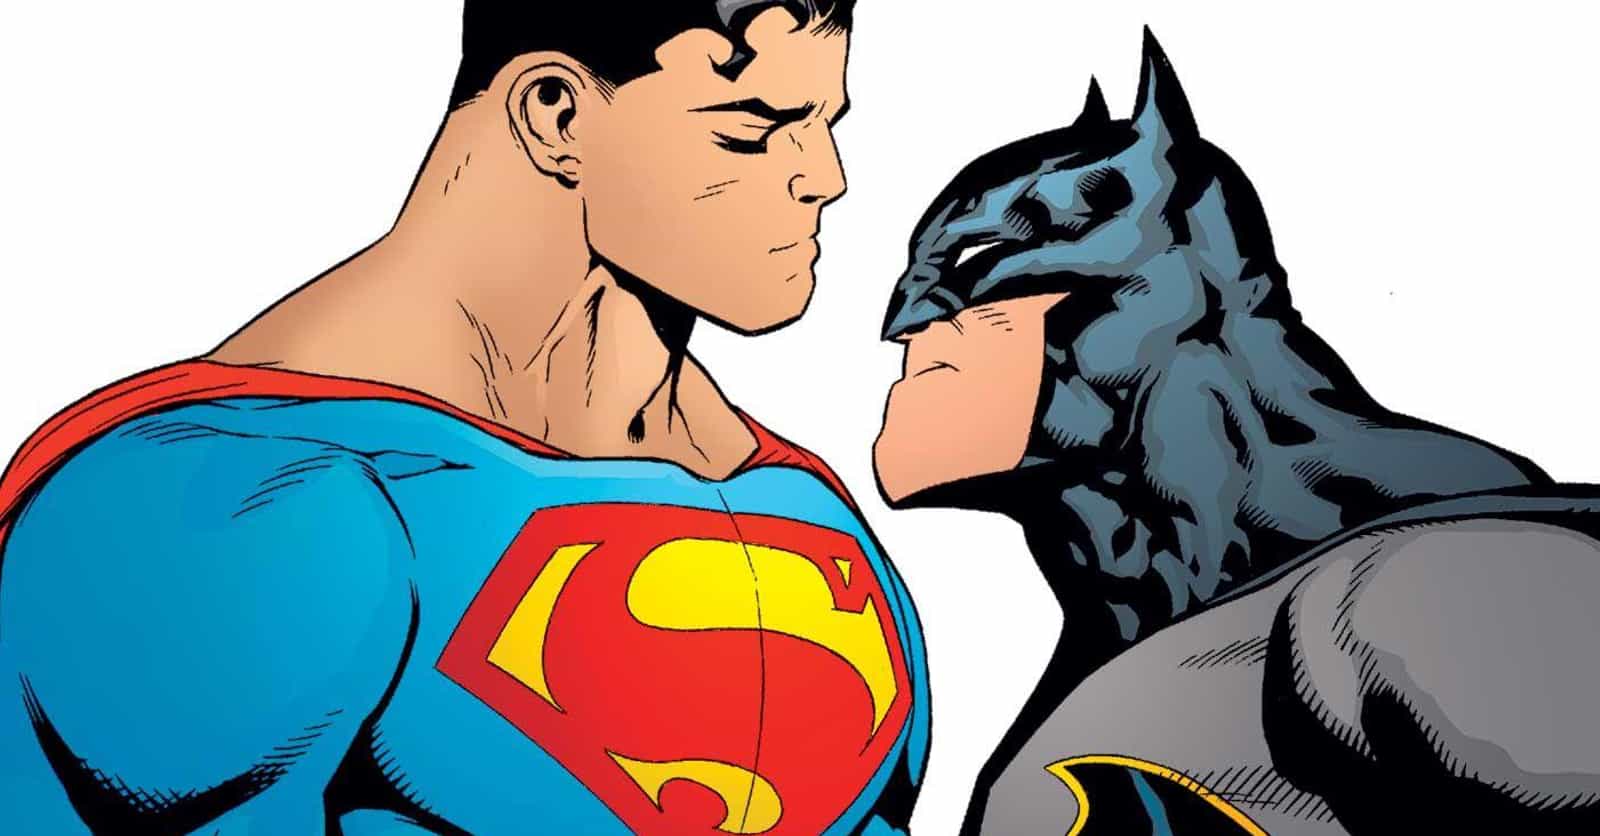 Inside The Psychosexual Relationship Between Superman And Batman